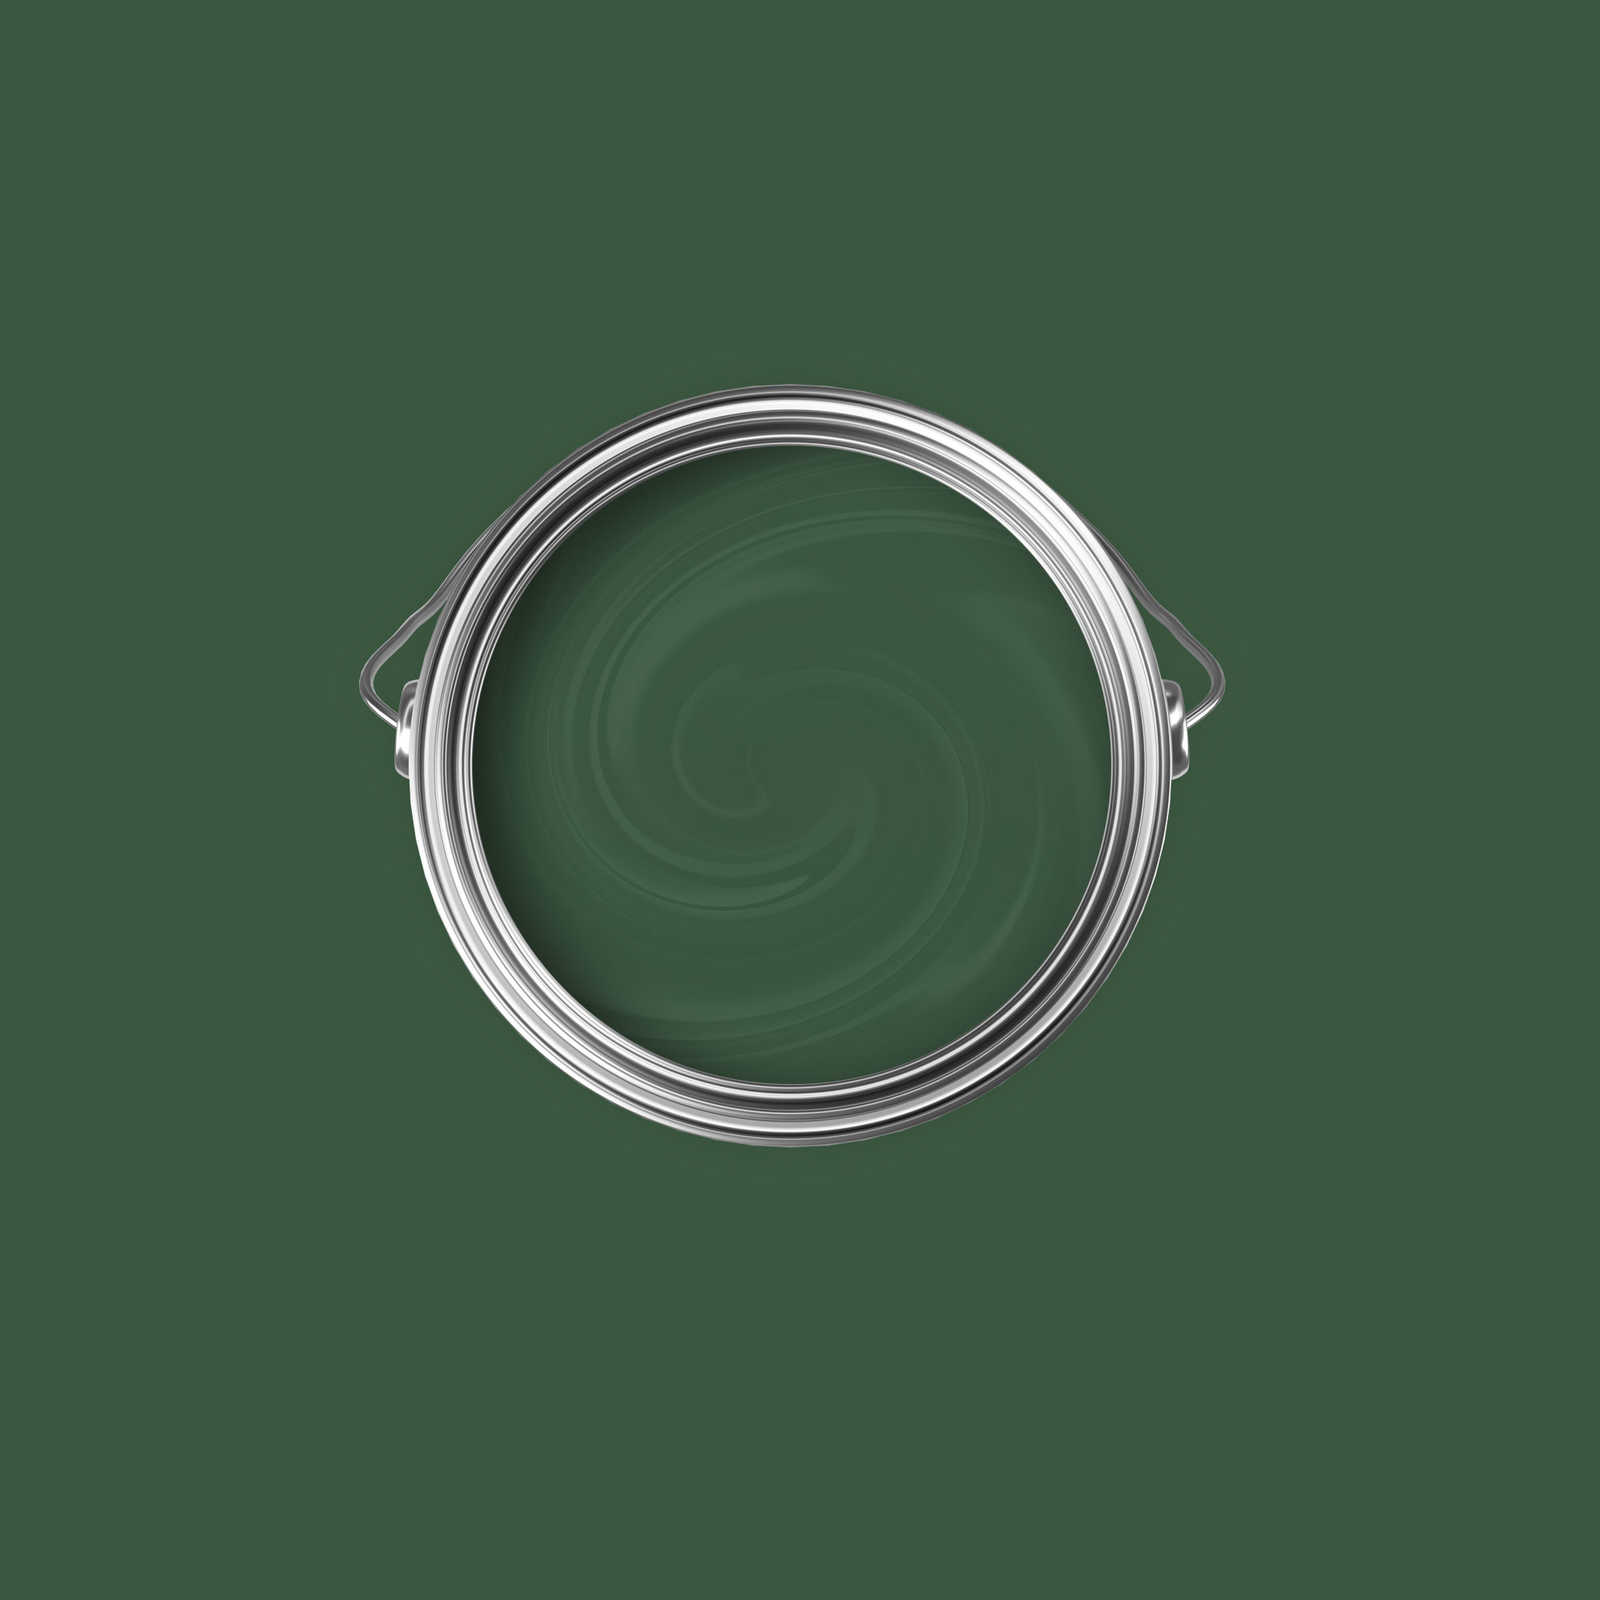             Premium Wall Paint Vivid Moss Green »Gorgeous Green« NW505 – 2.5 litre
        